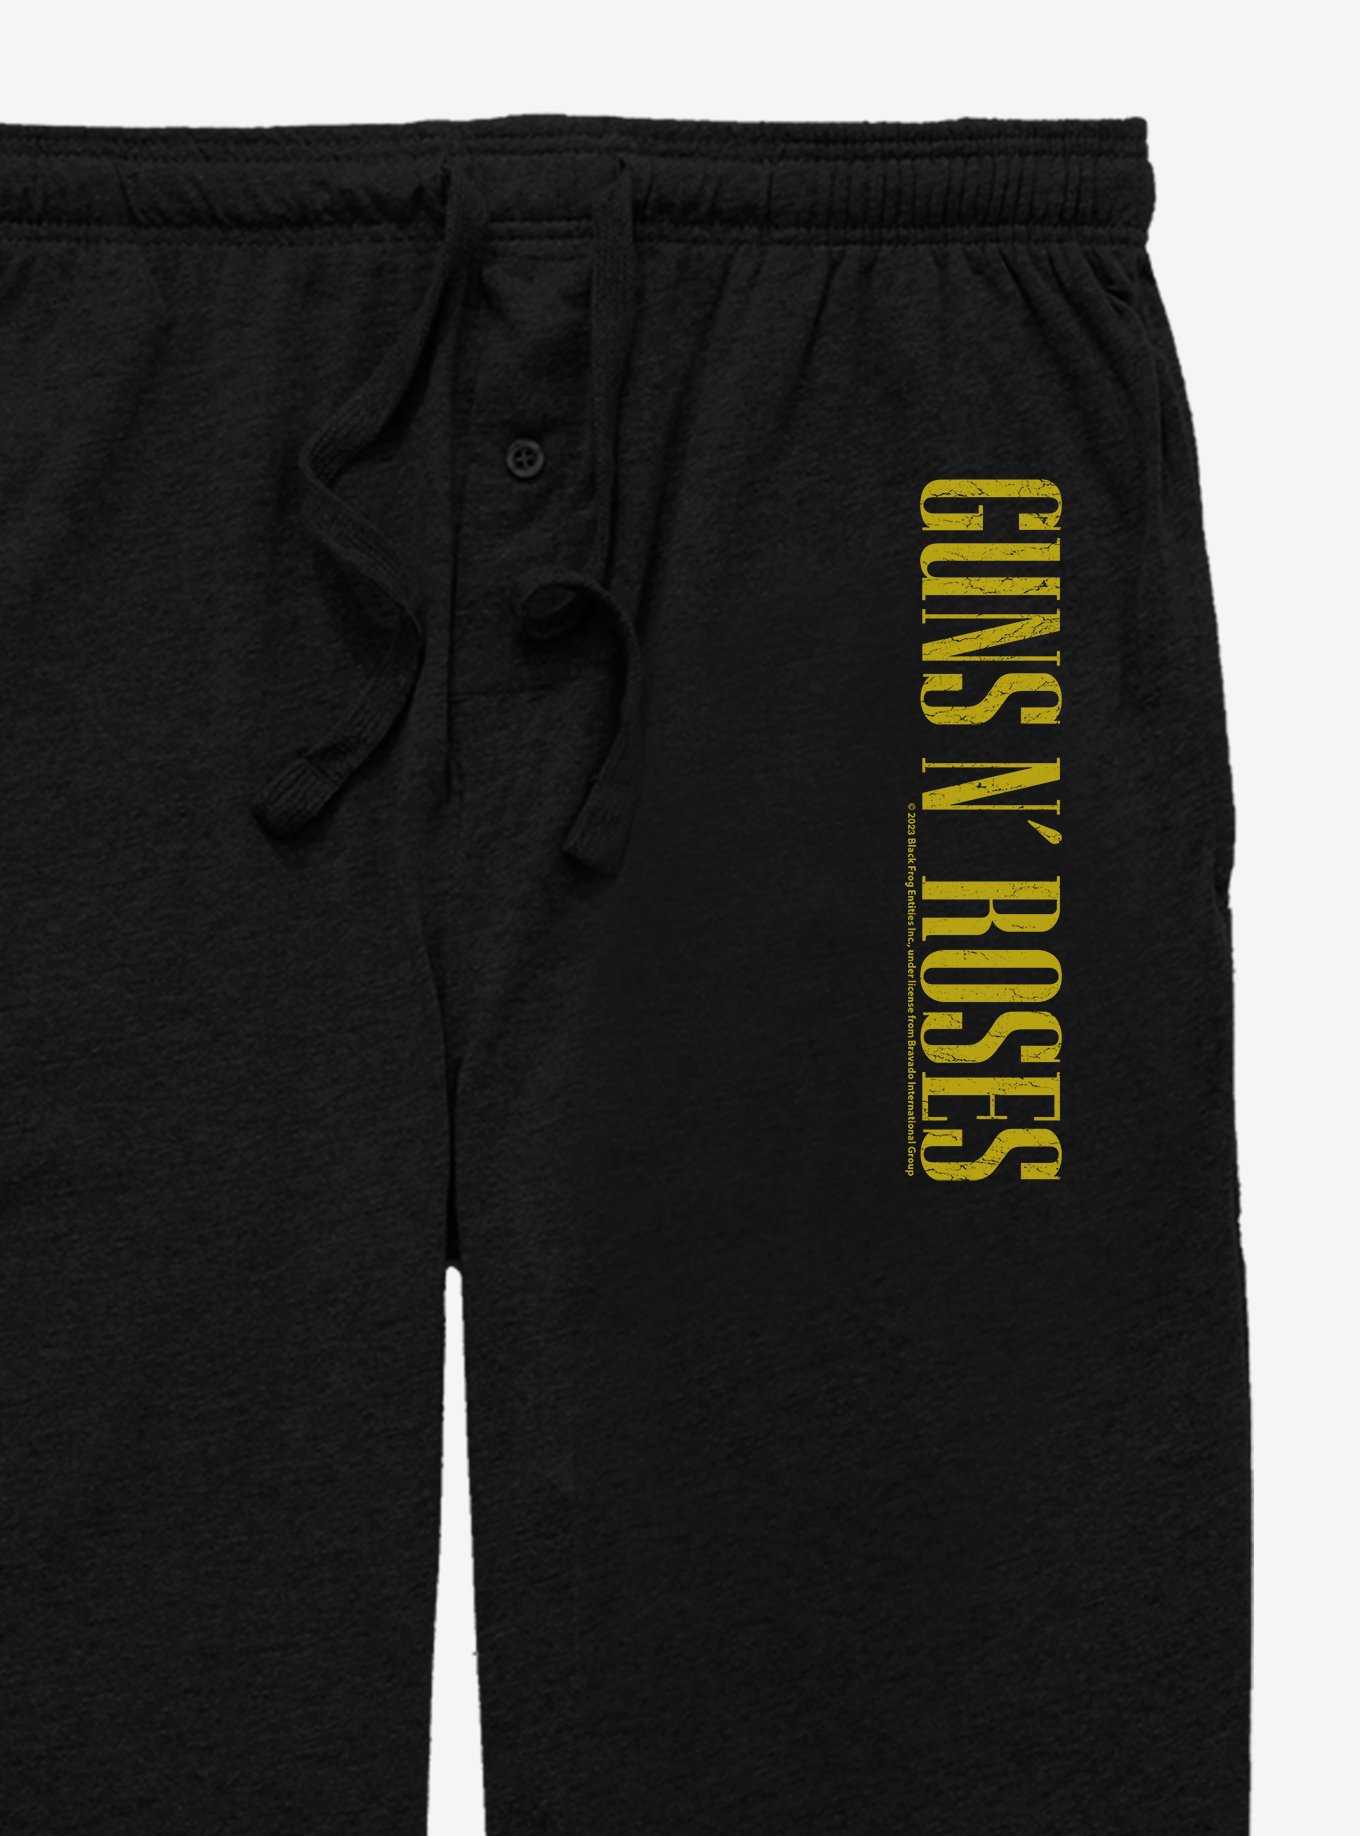 Guns N' Roses Band Logo Pajama Pants, , hi-res